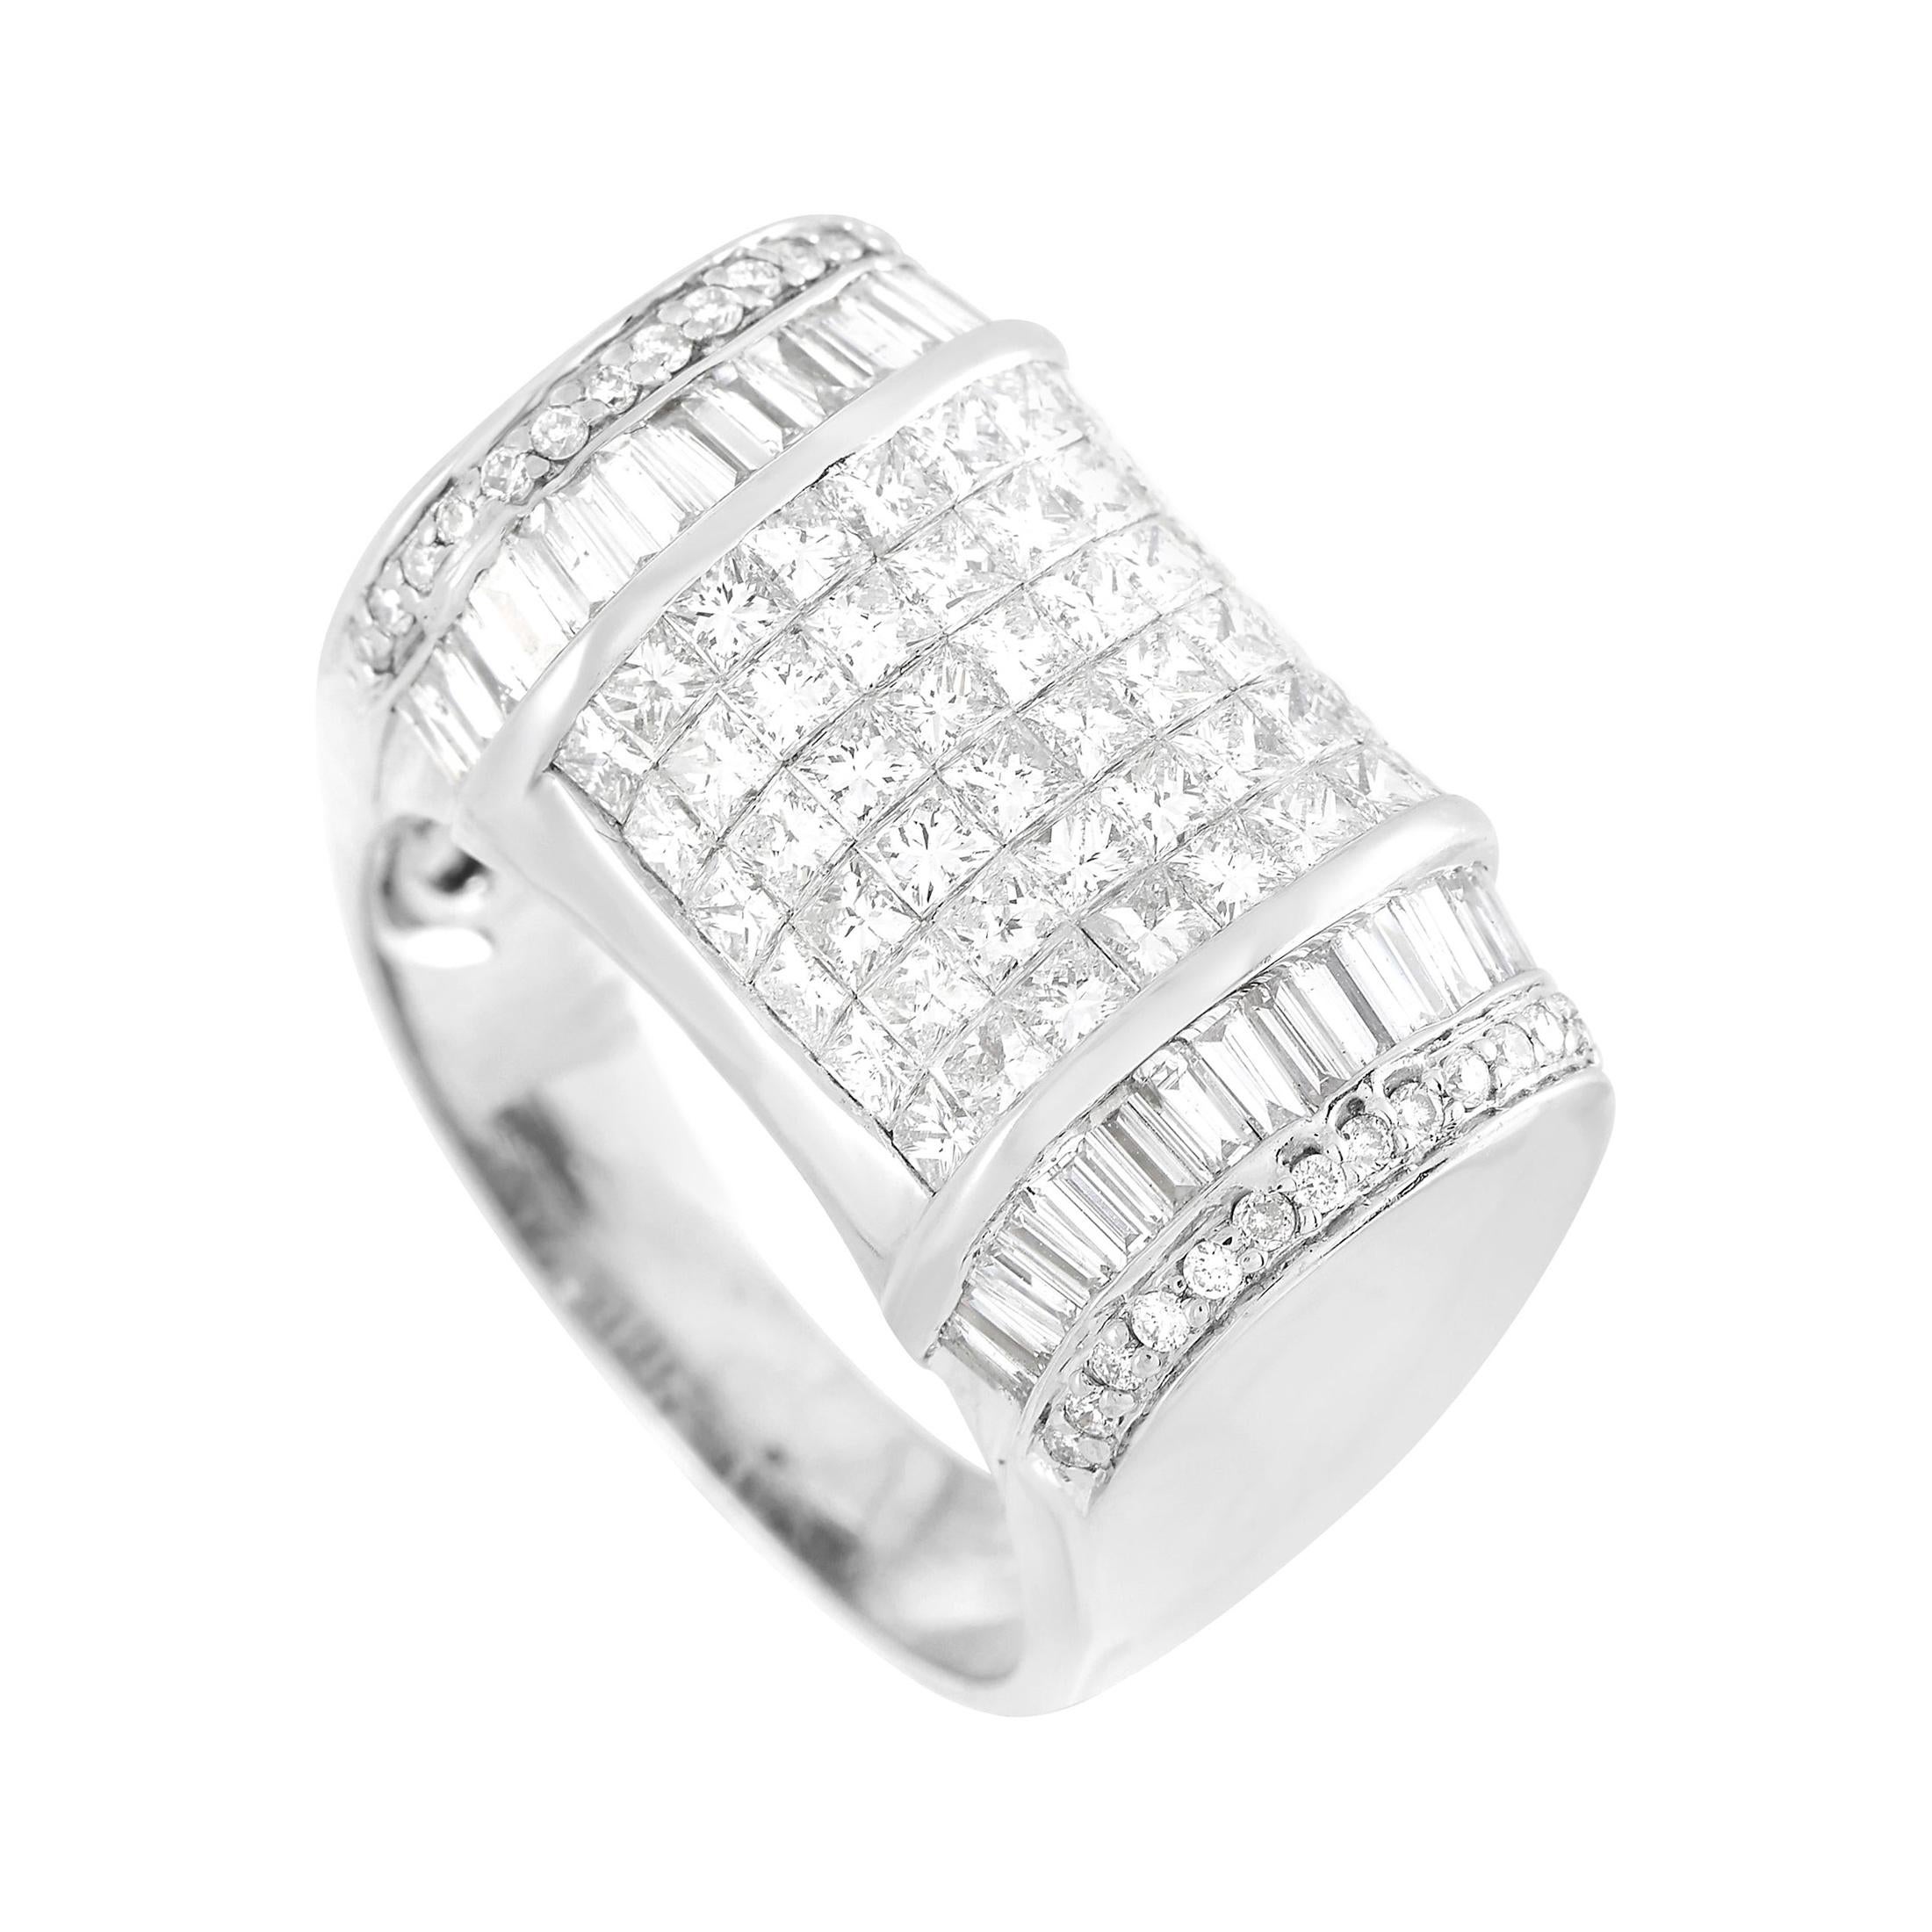 LB Exclusive 18k White Gold 4.75 Ct Diamond Ring